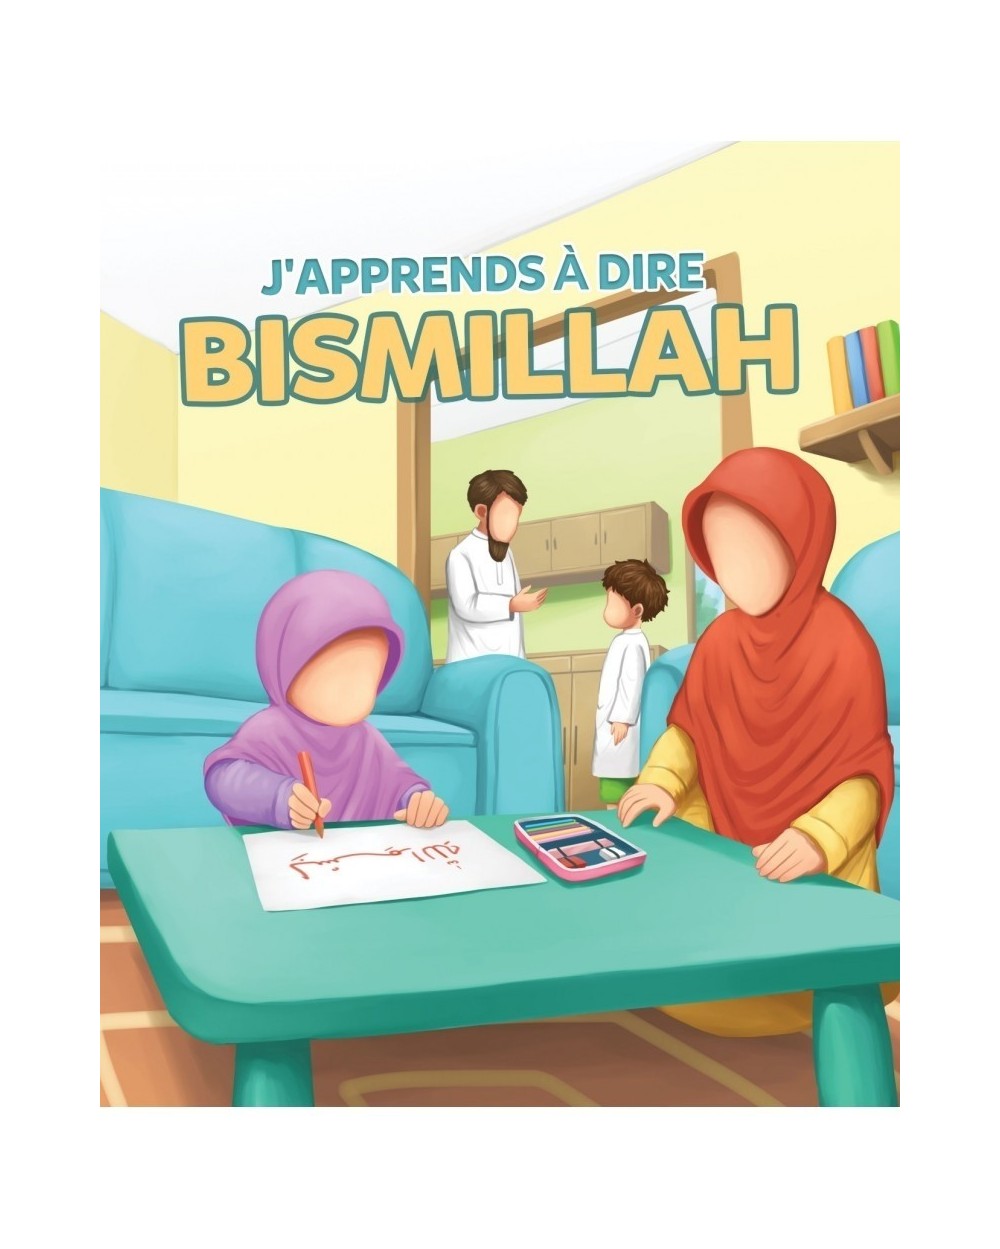 I learn to say Bismillah - Muslim kid